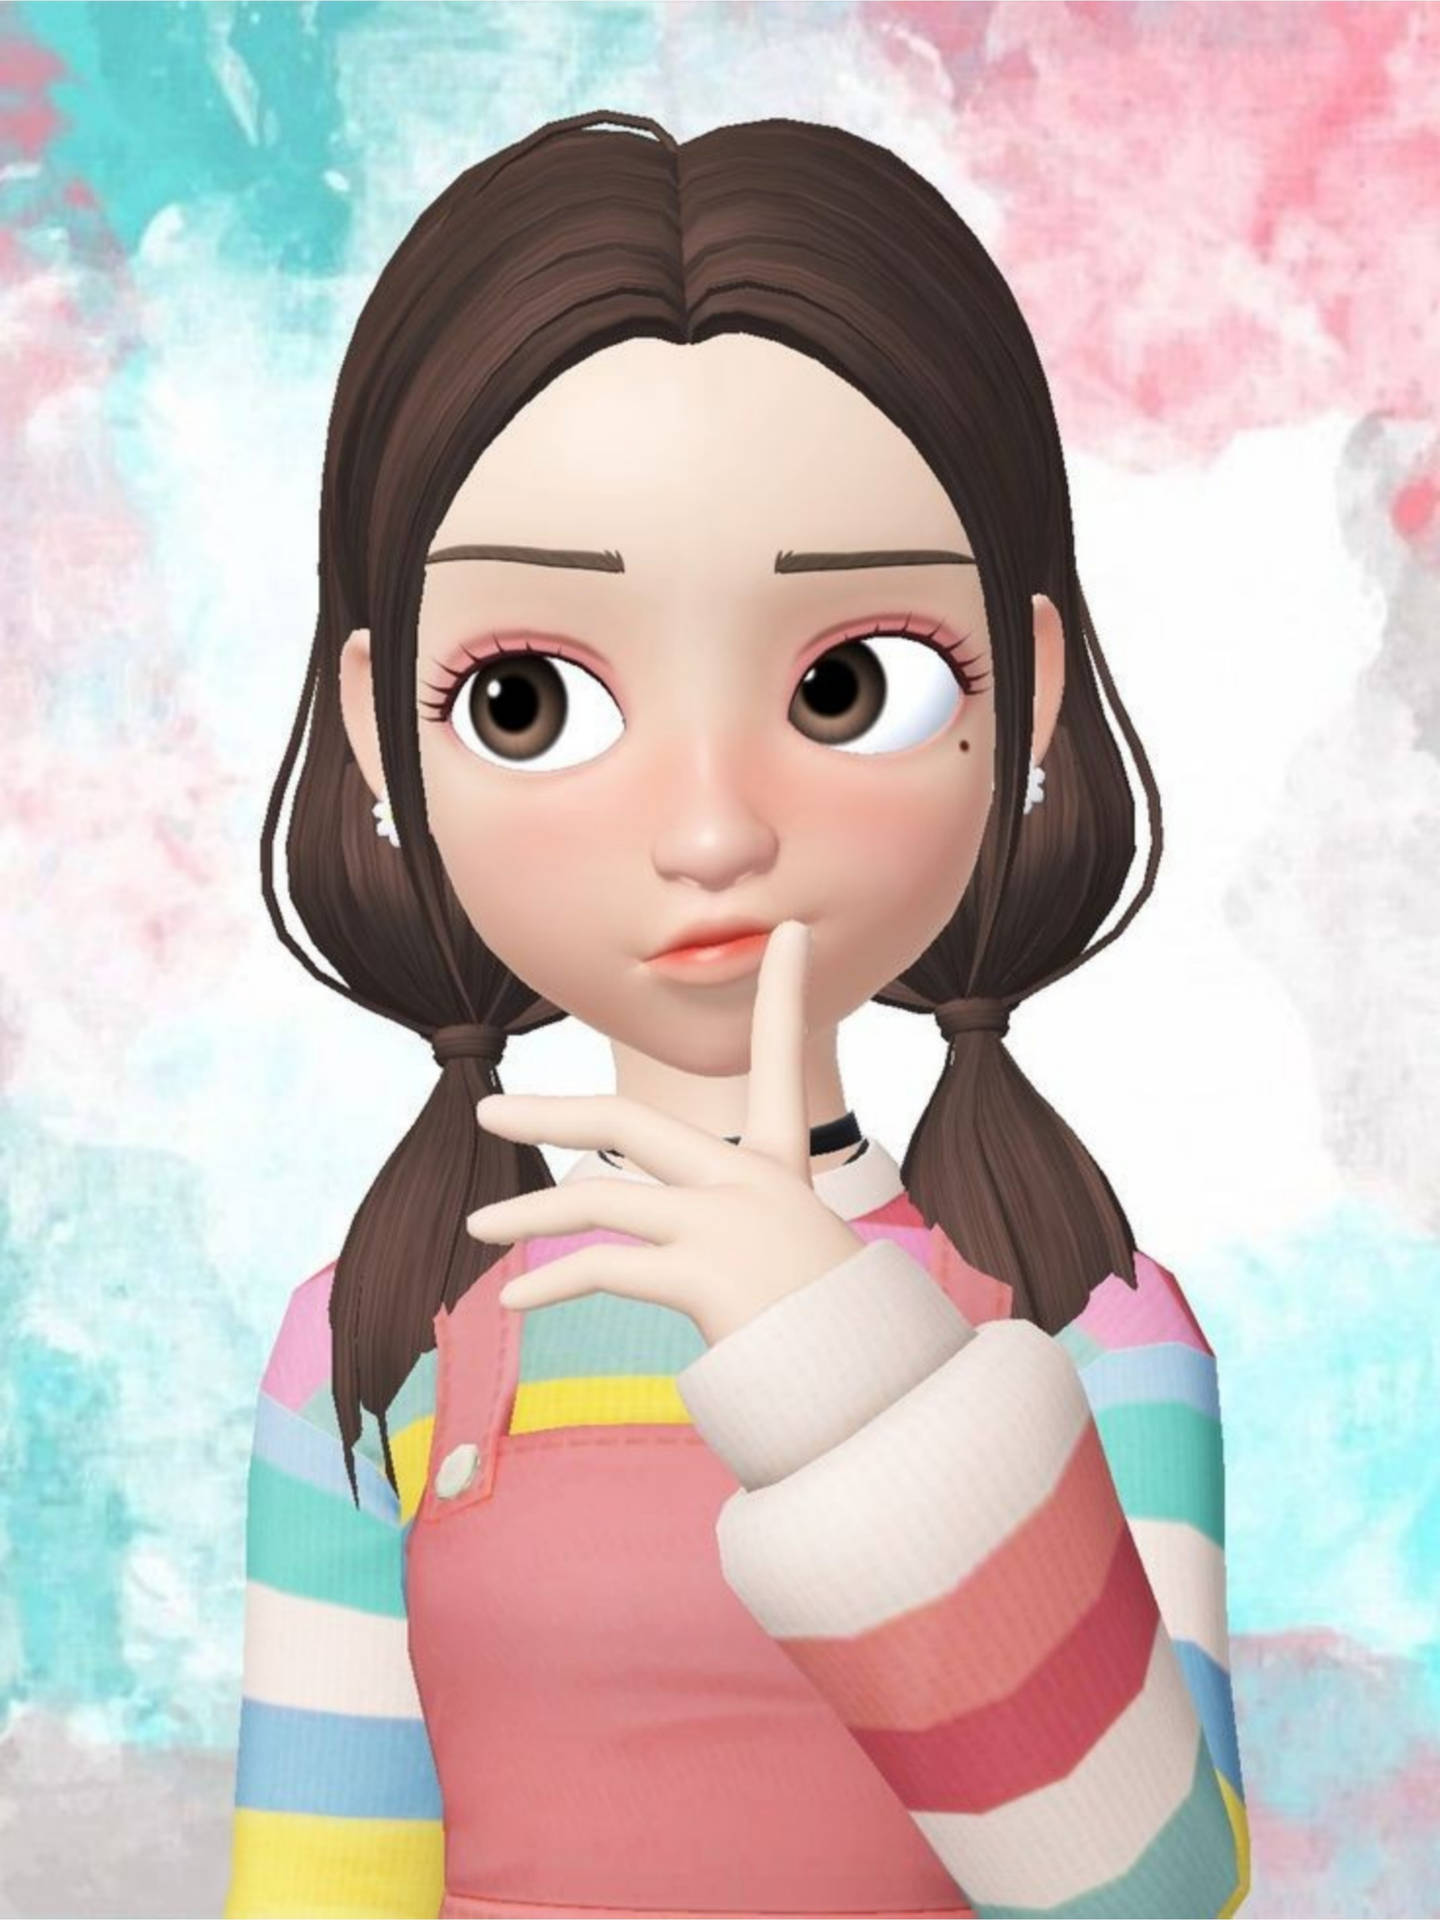 Zepeto Cute Girl With Rainbow Sweater